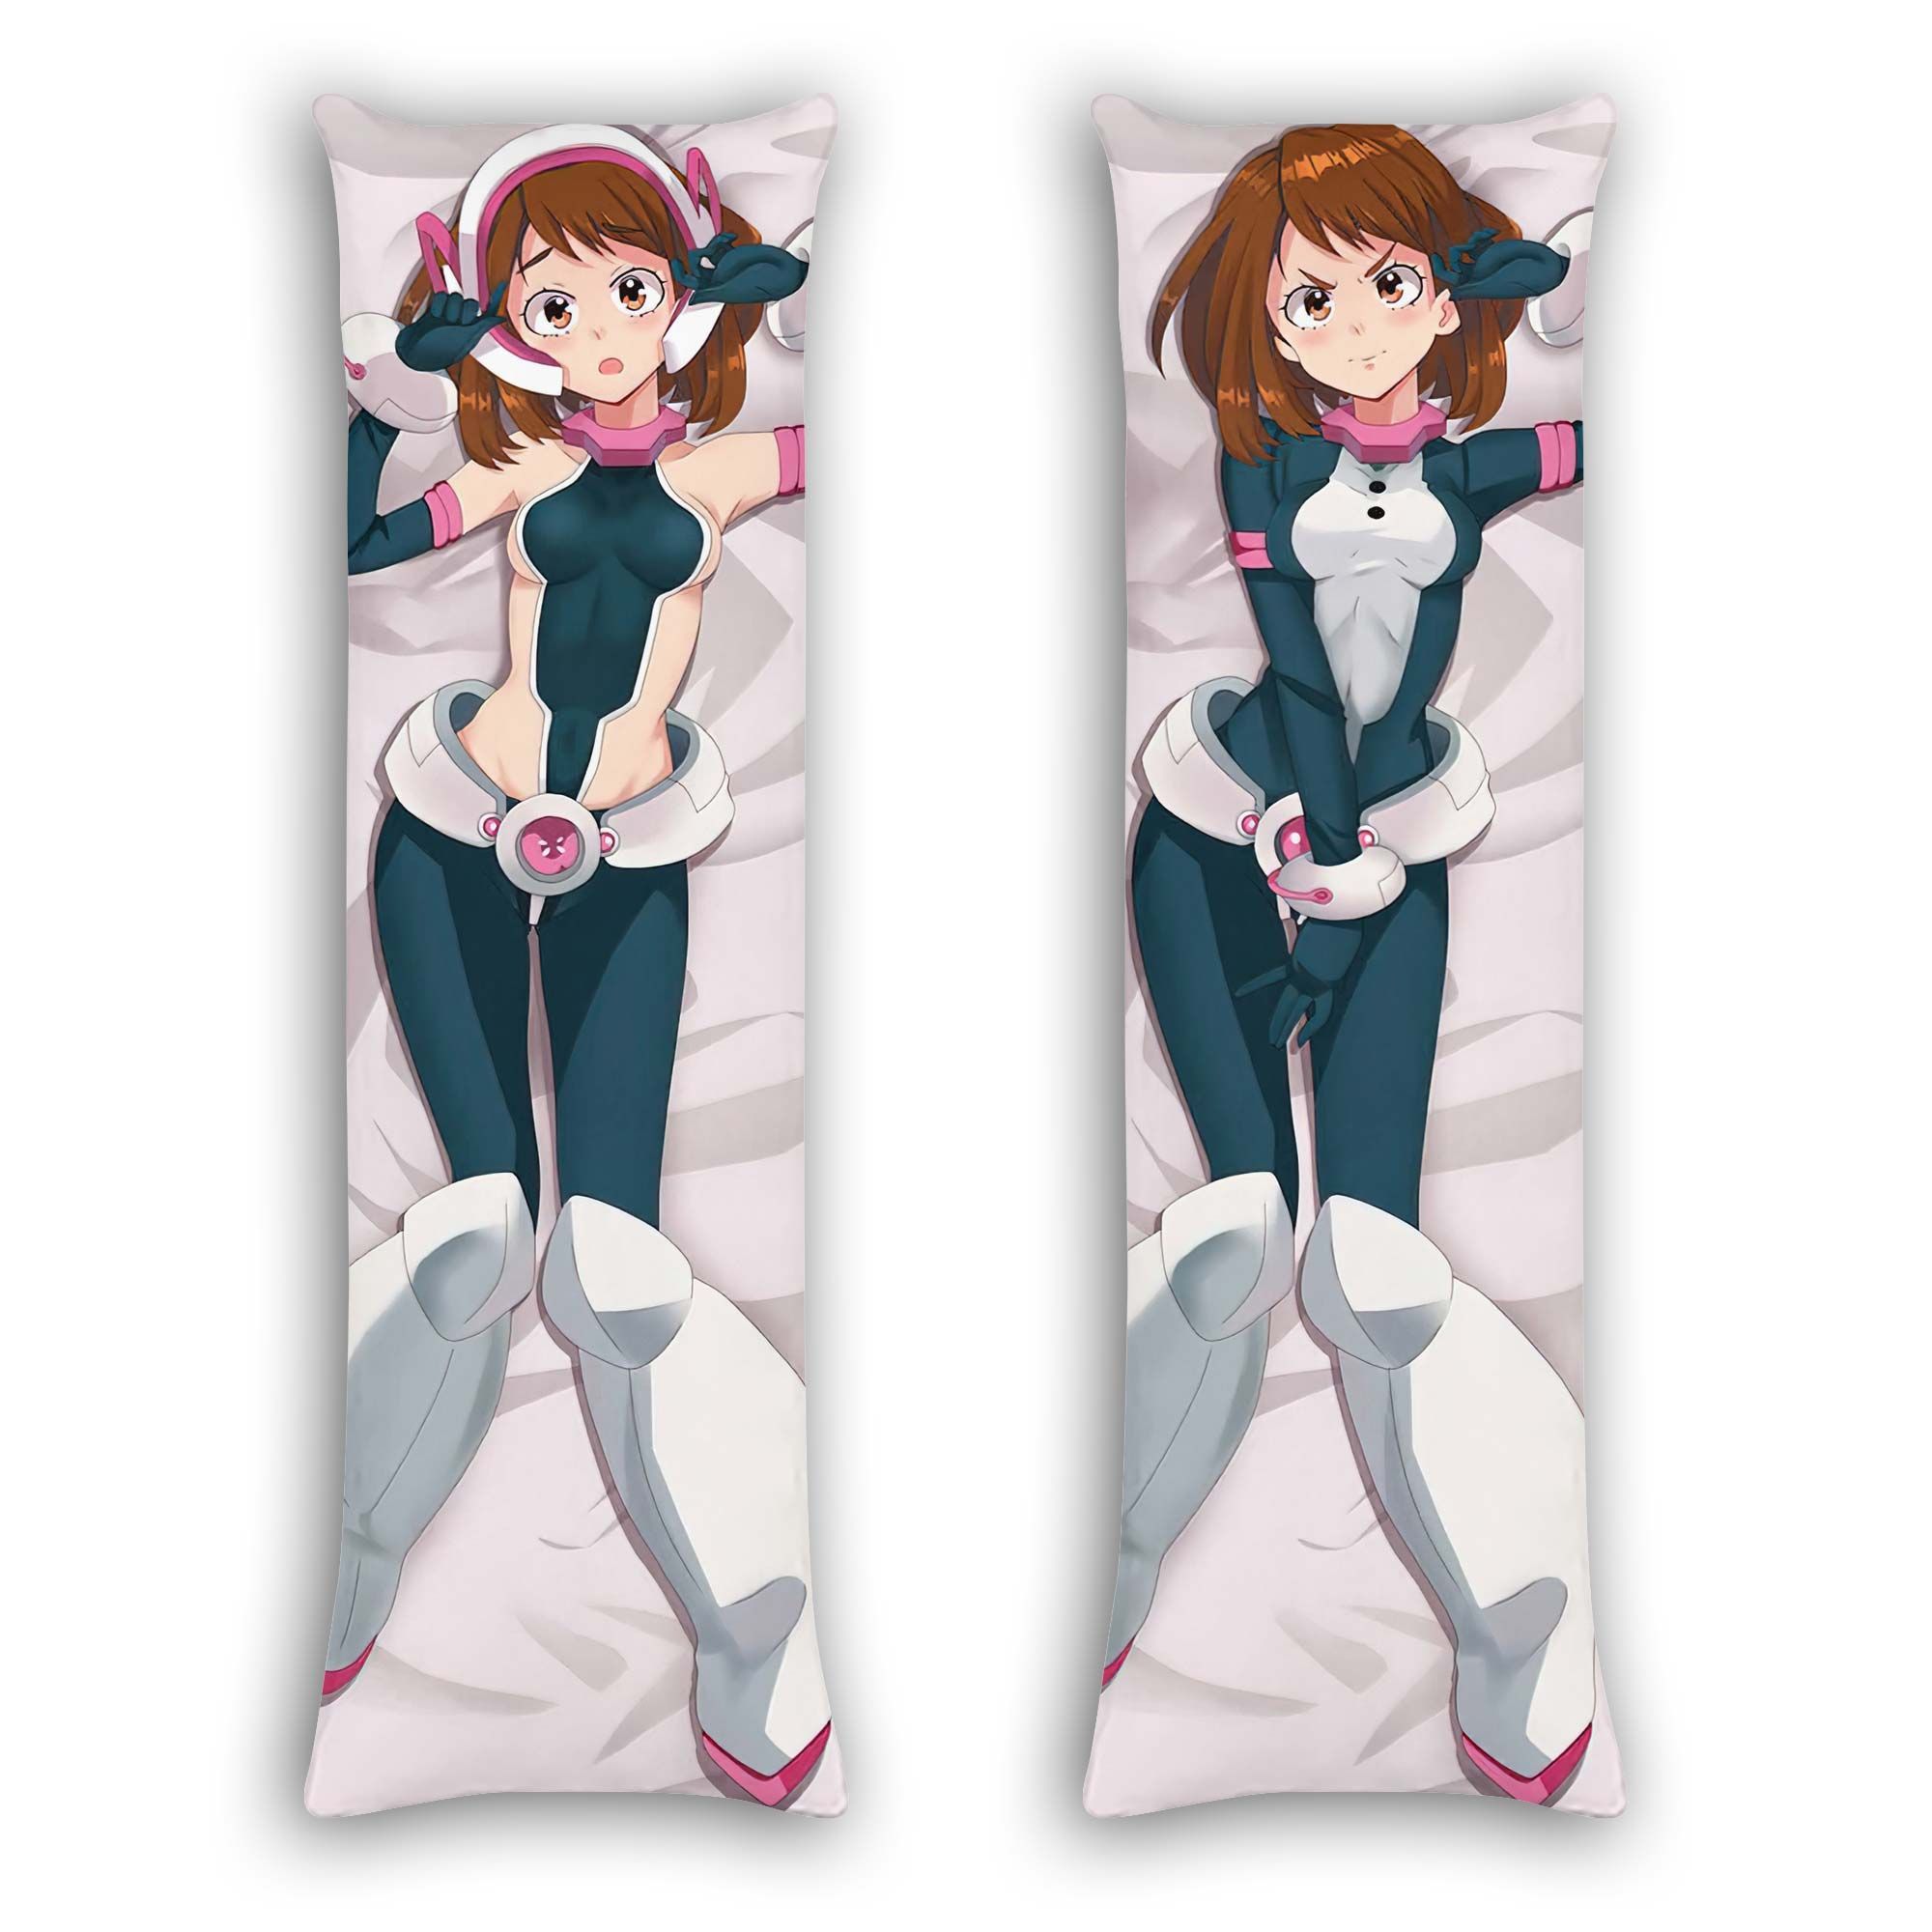 MHA Ochako Uraraka Body Pillow Cover Anime Gifts Idea For Otaku Girl Official Merch GO0110